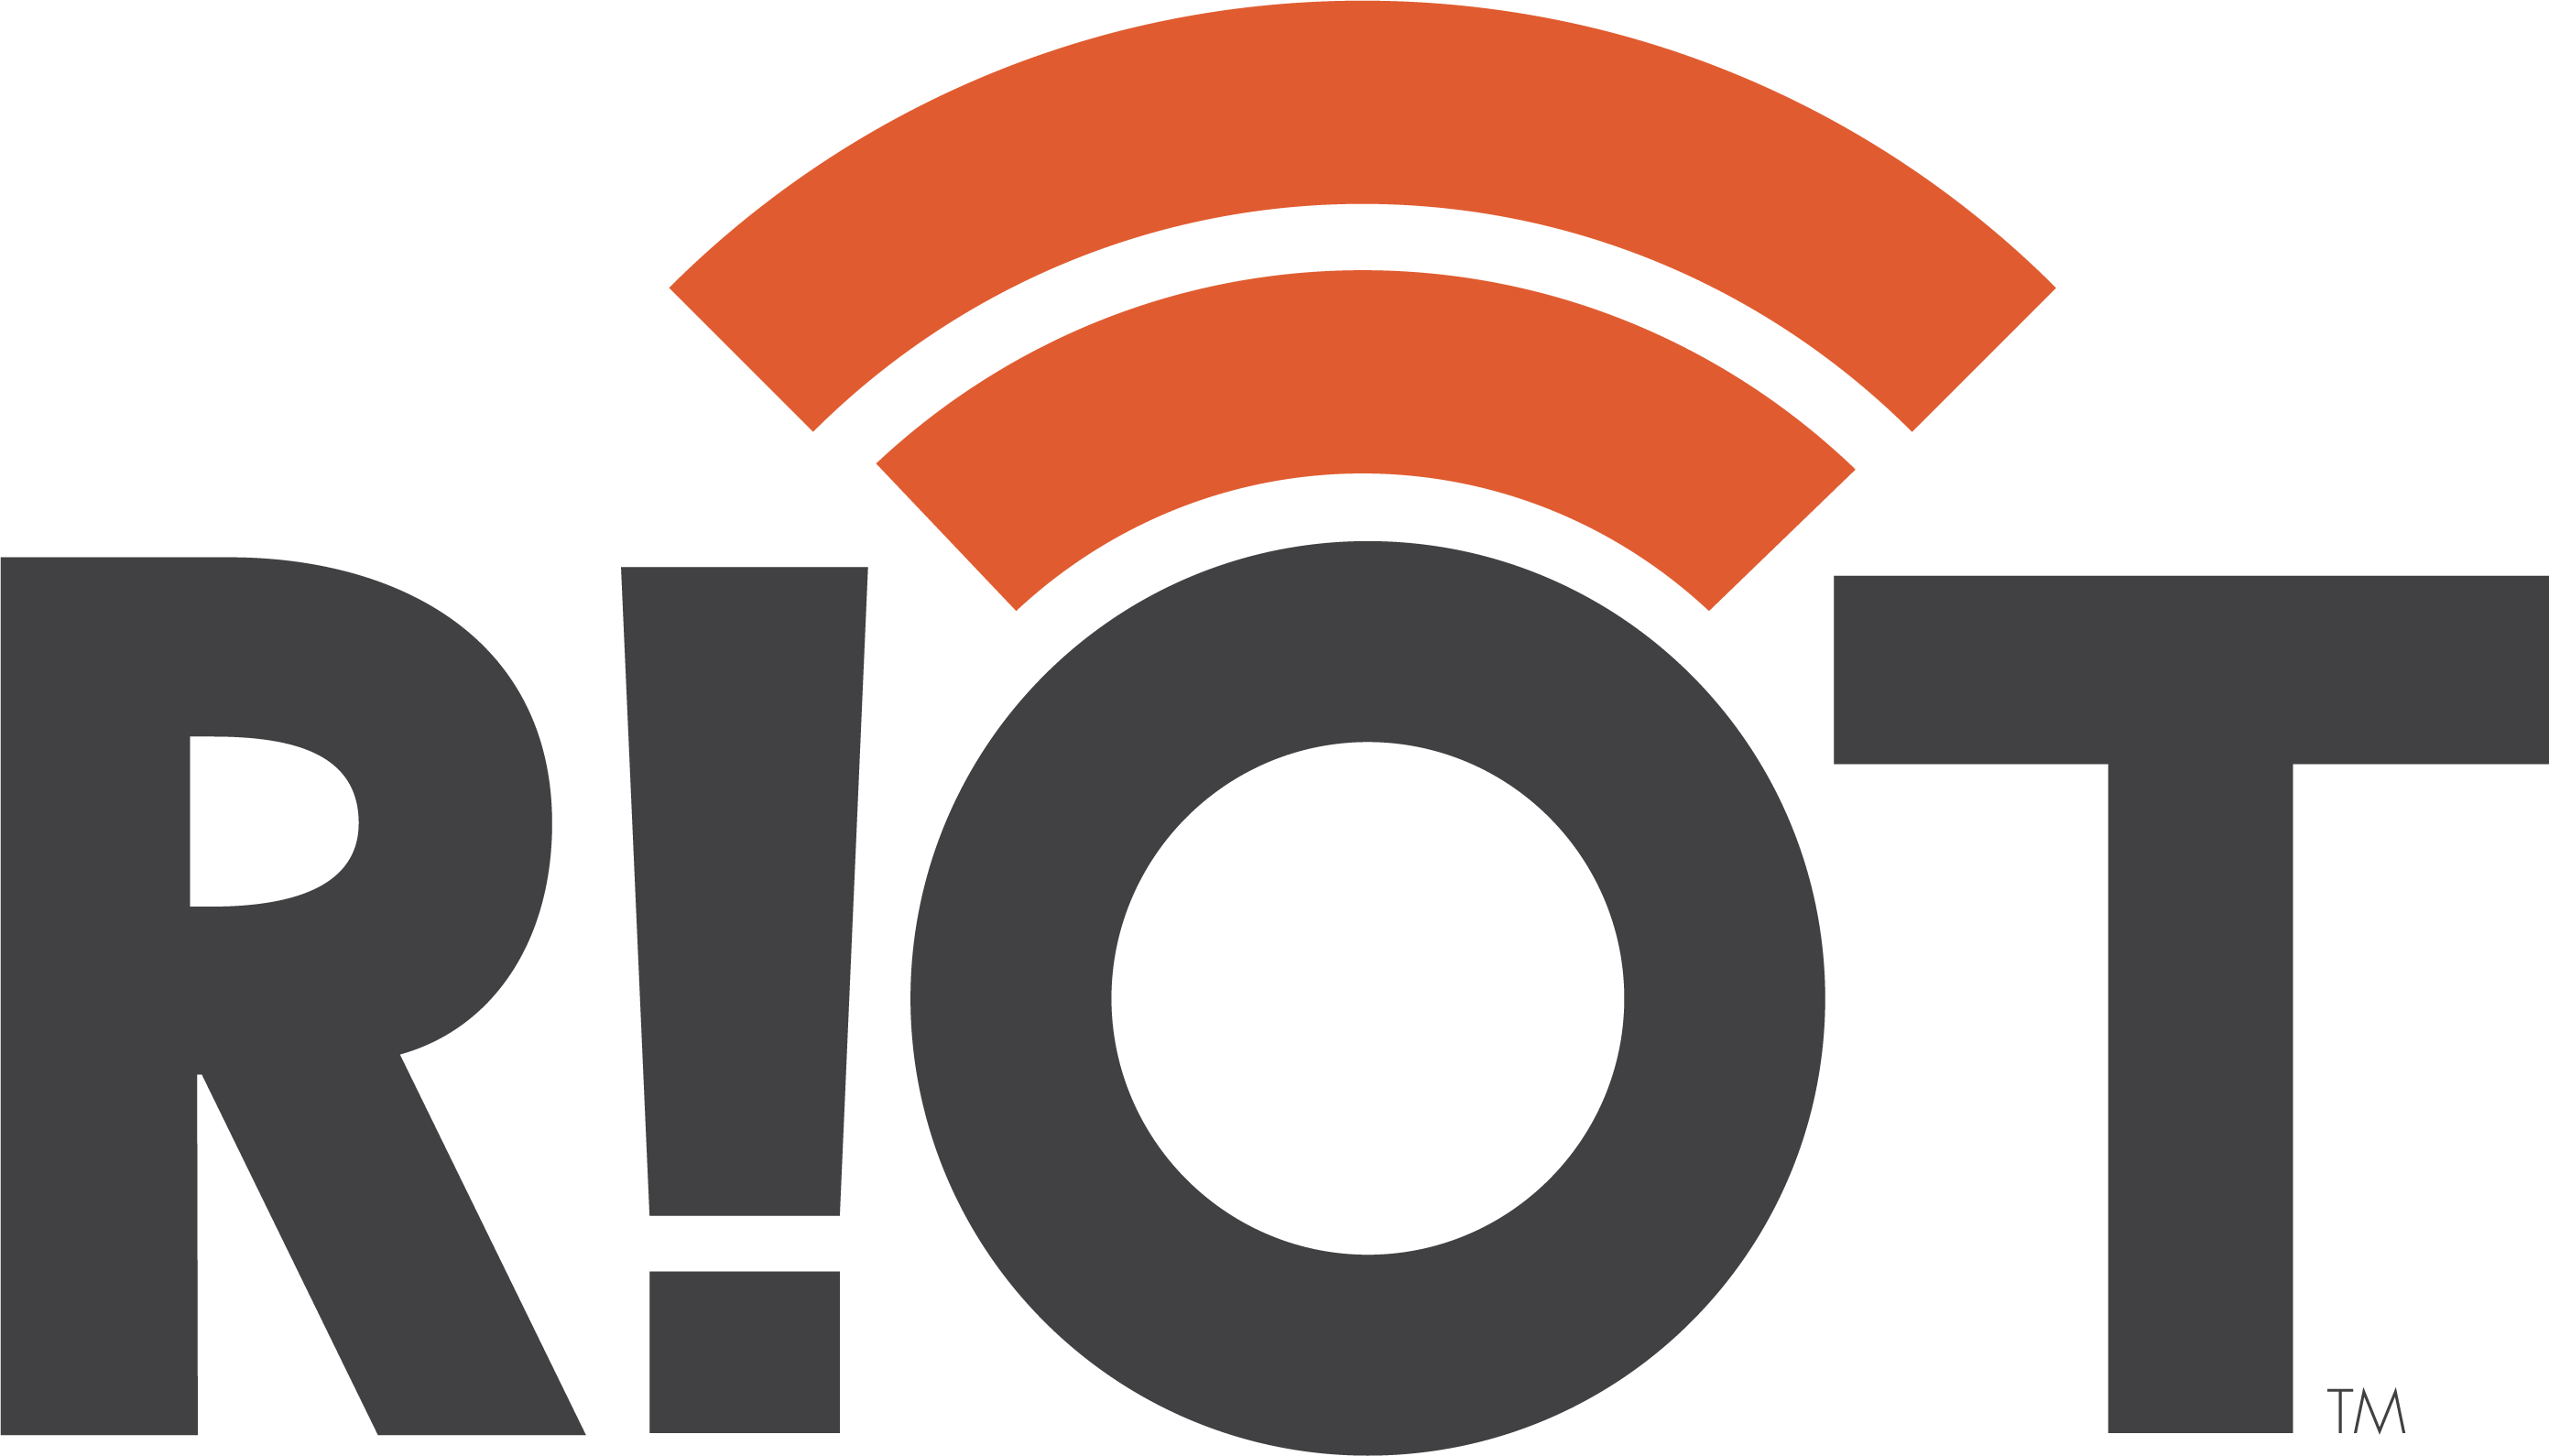 Regional Internet of Things (RIoT) logo